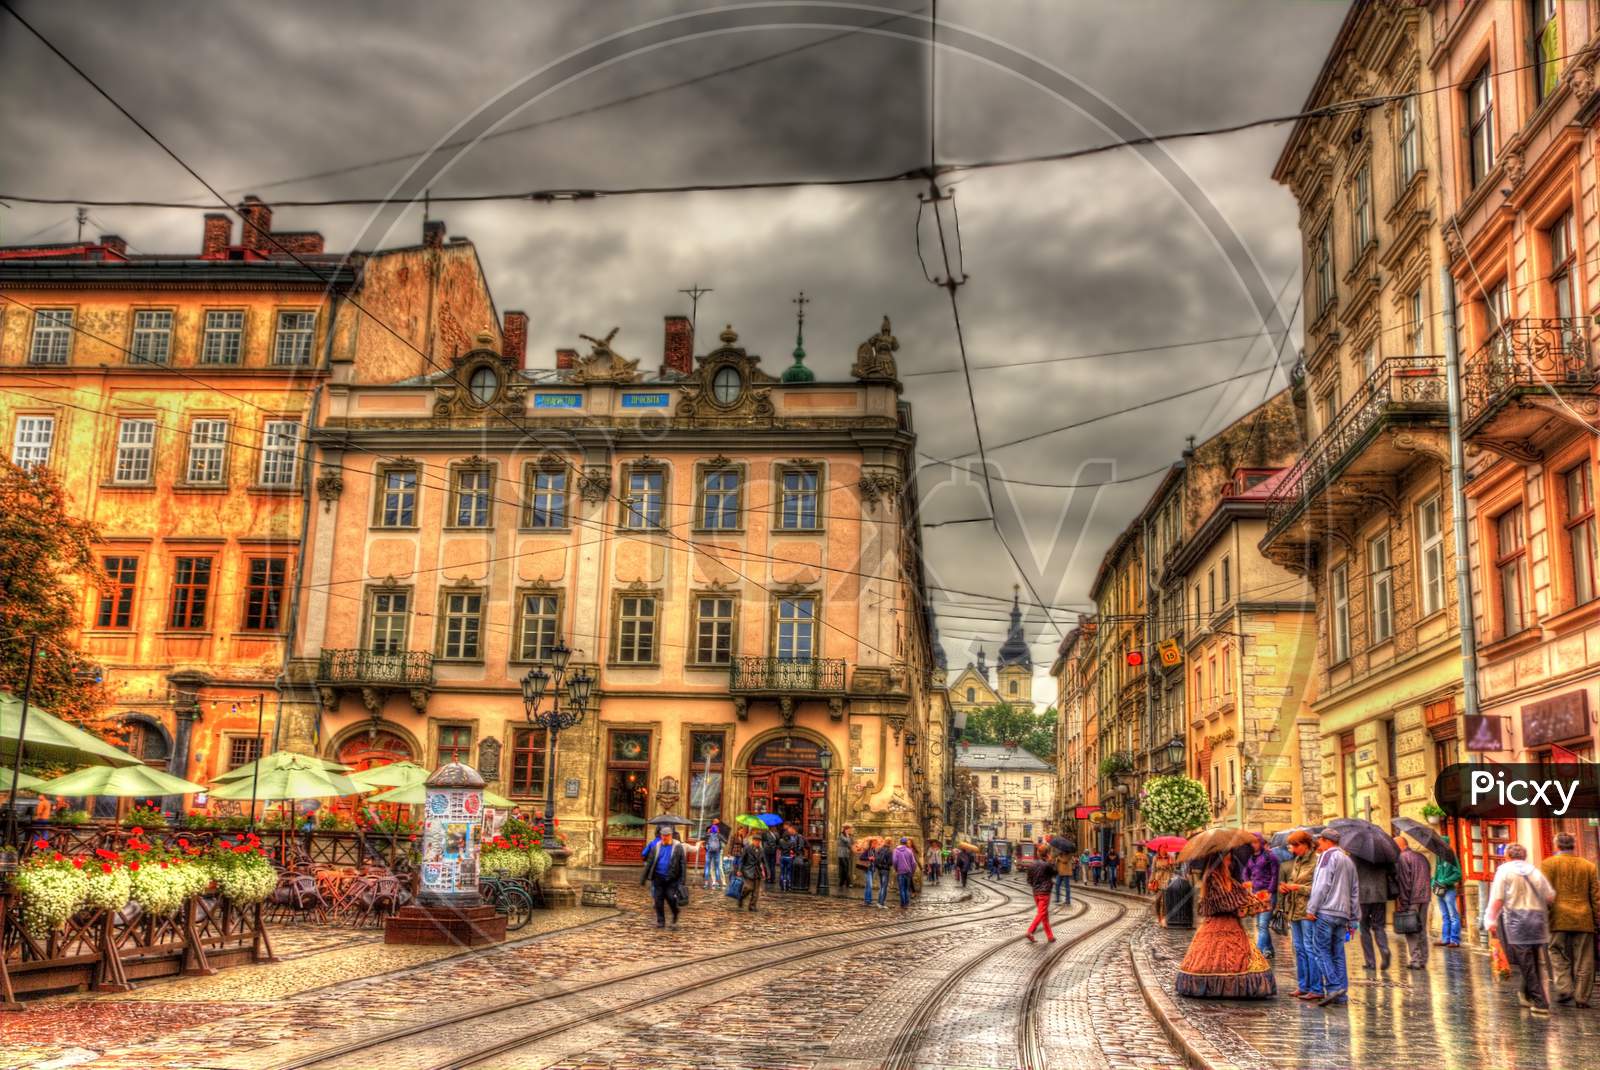 Market Square, The Central Square Of Lviv